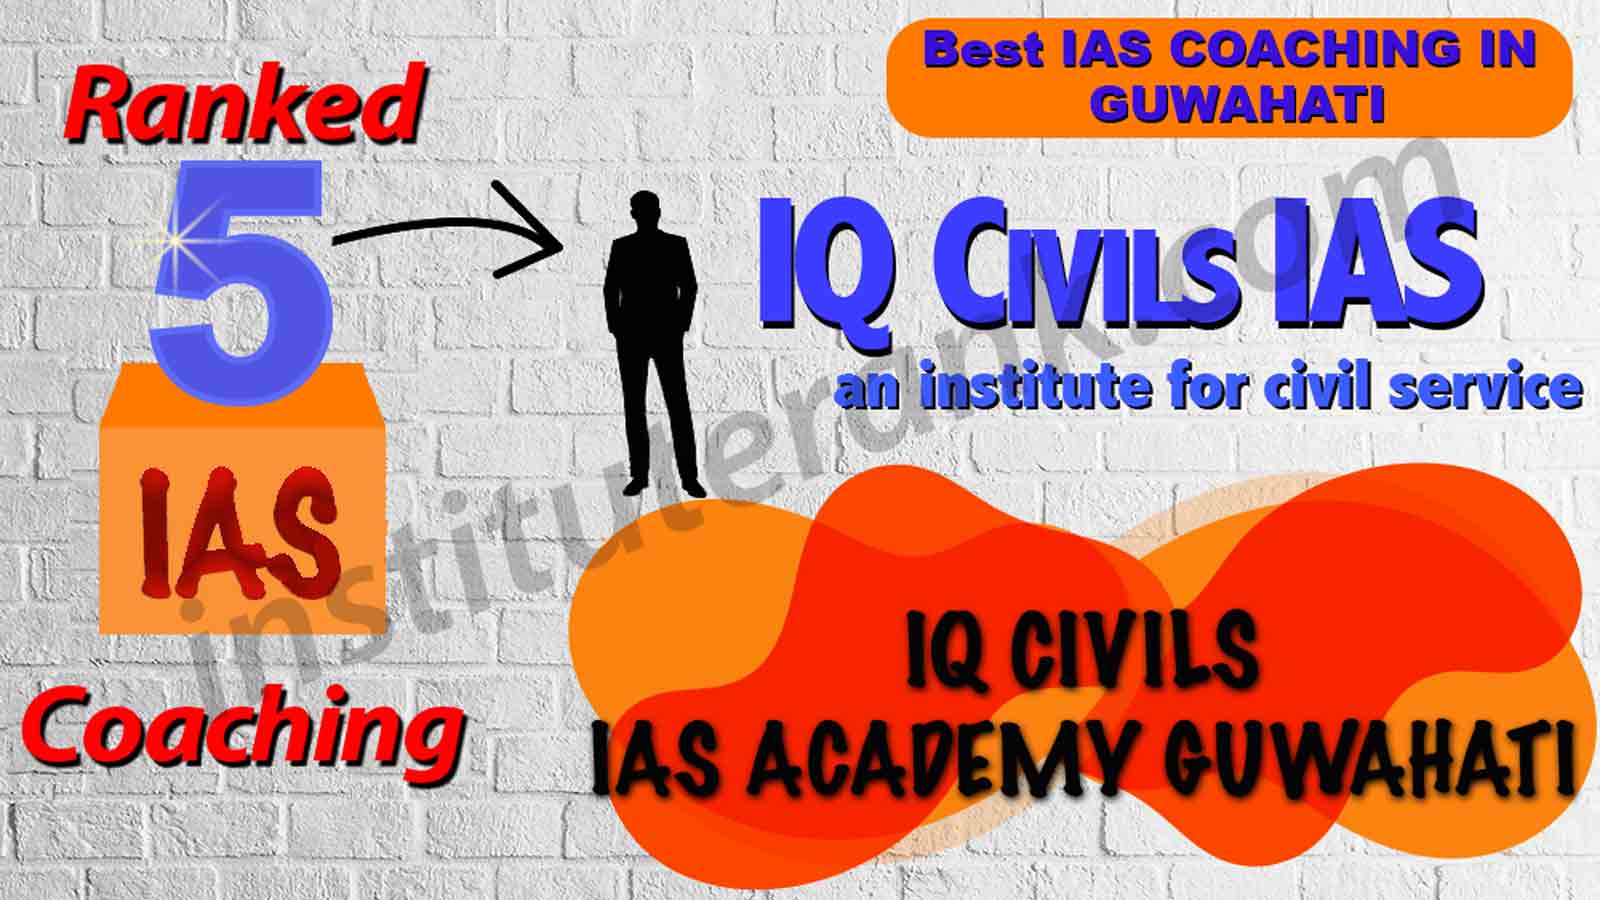 Best IAS Coaching in Guwahati